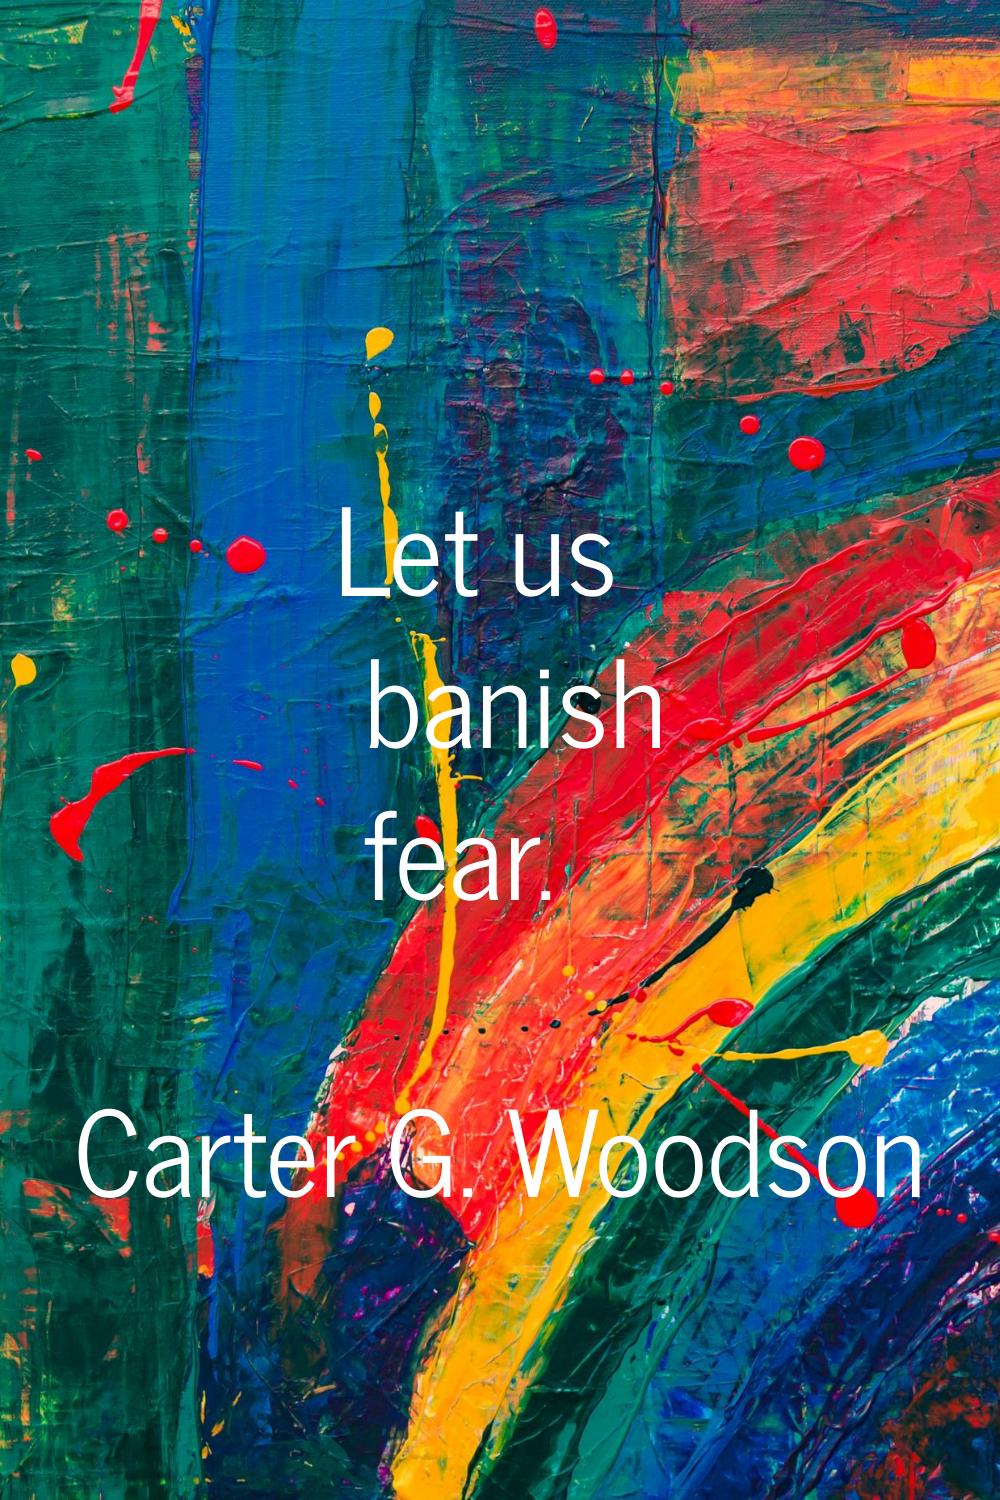 Let us banish fear.